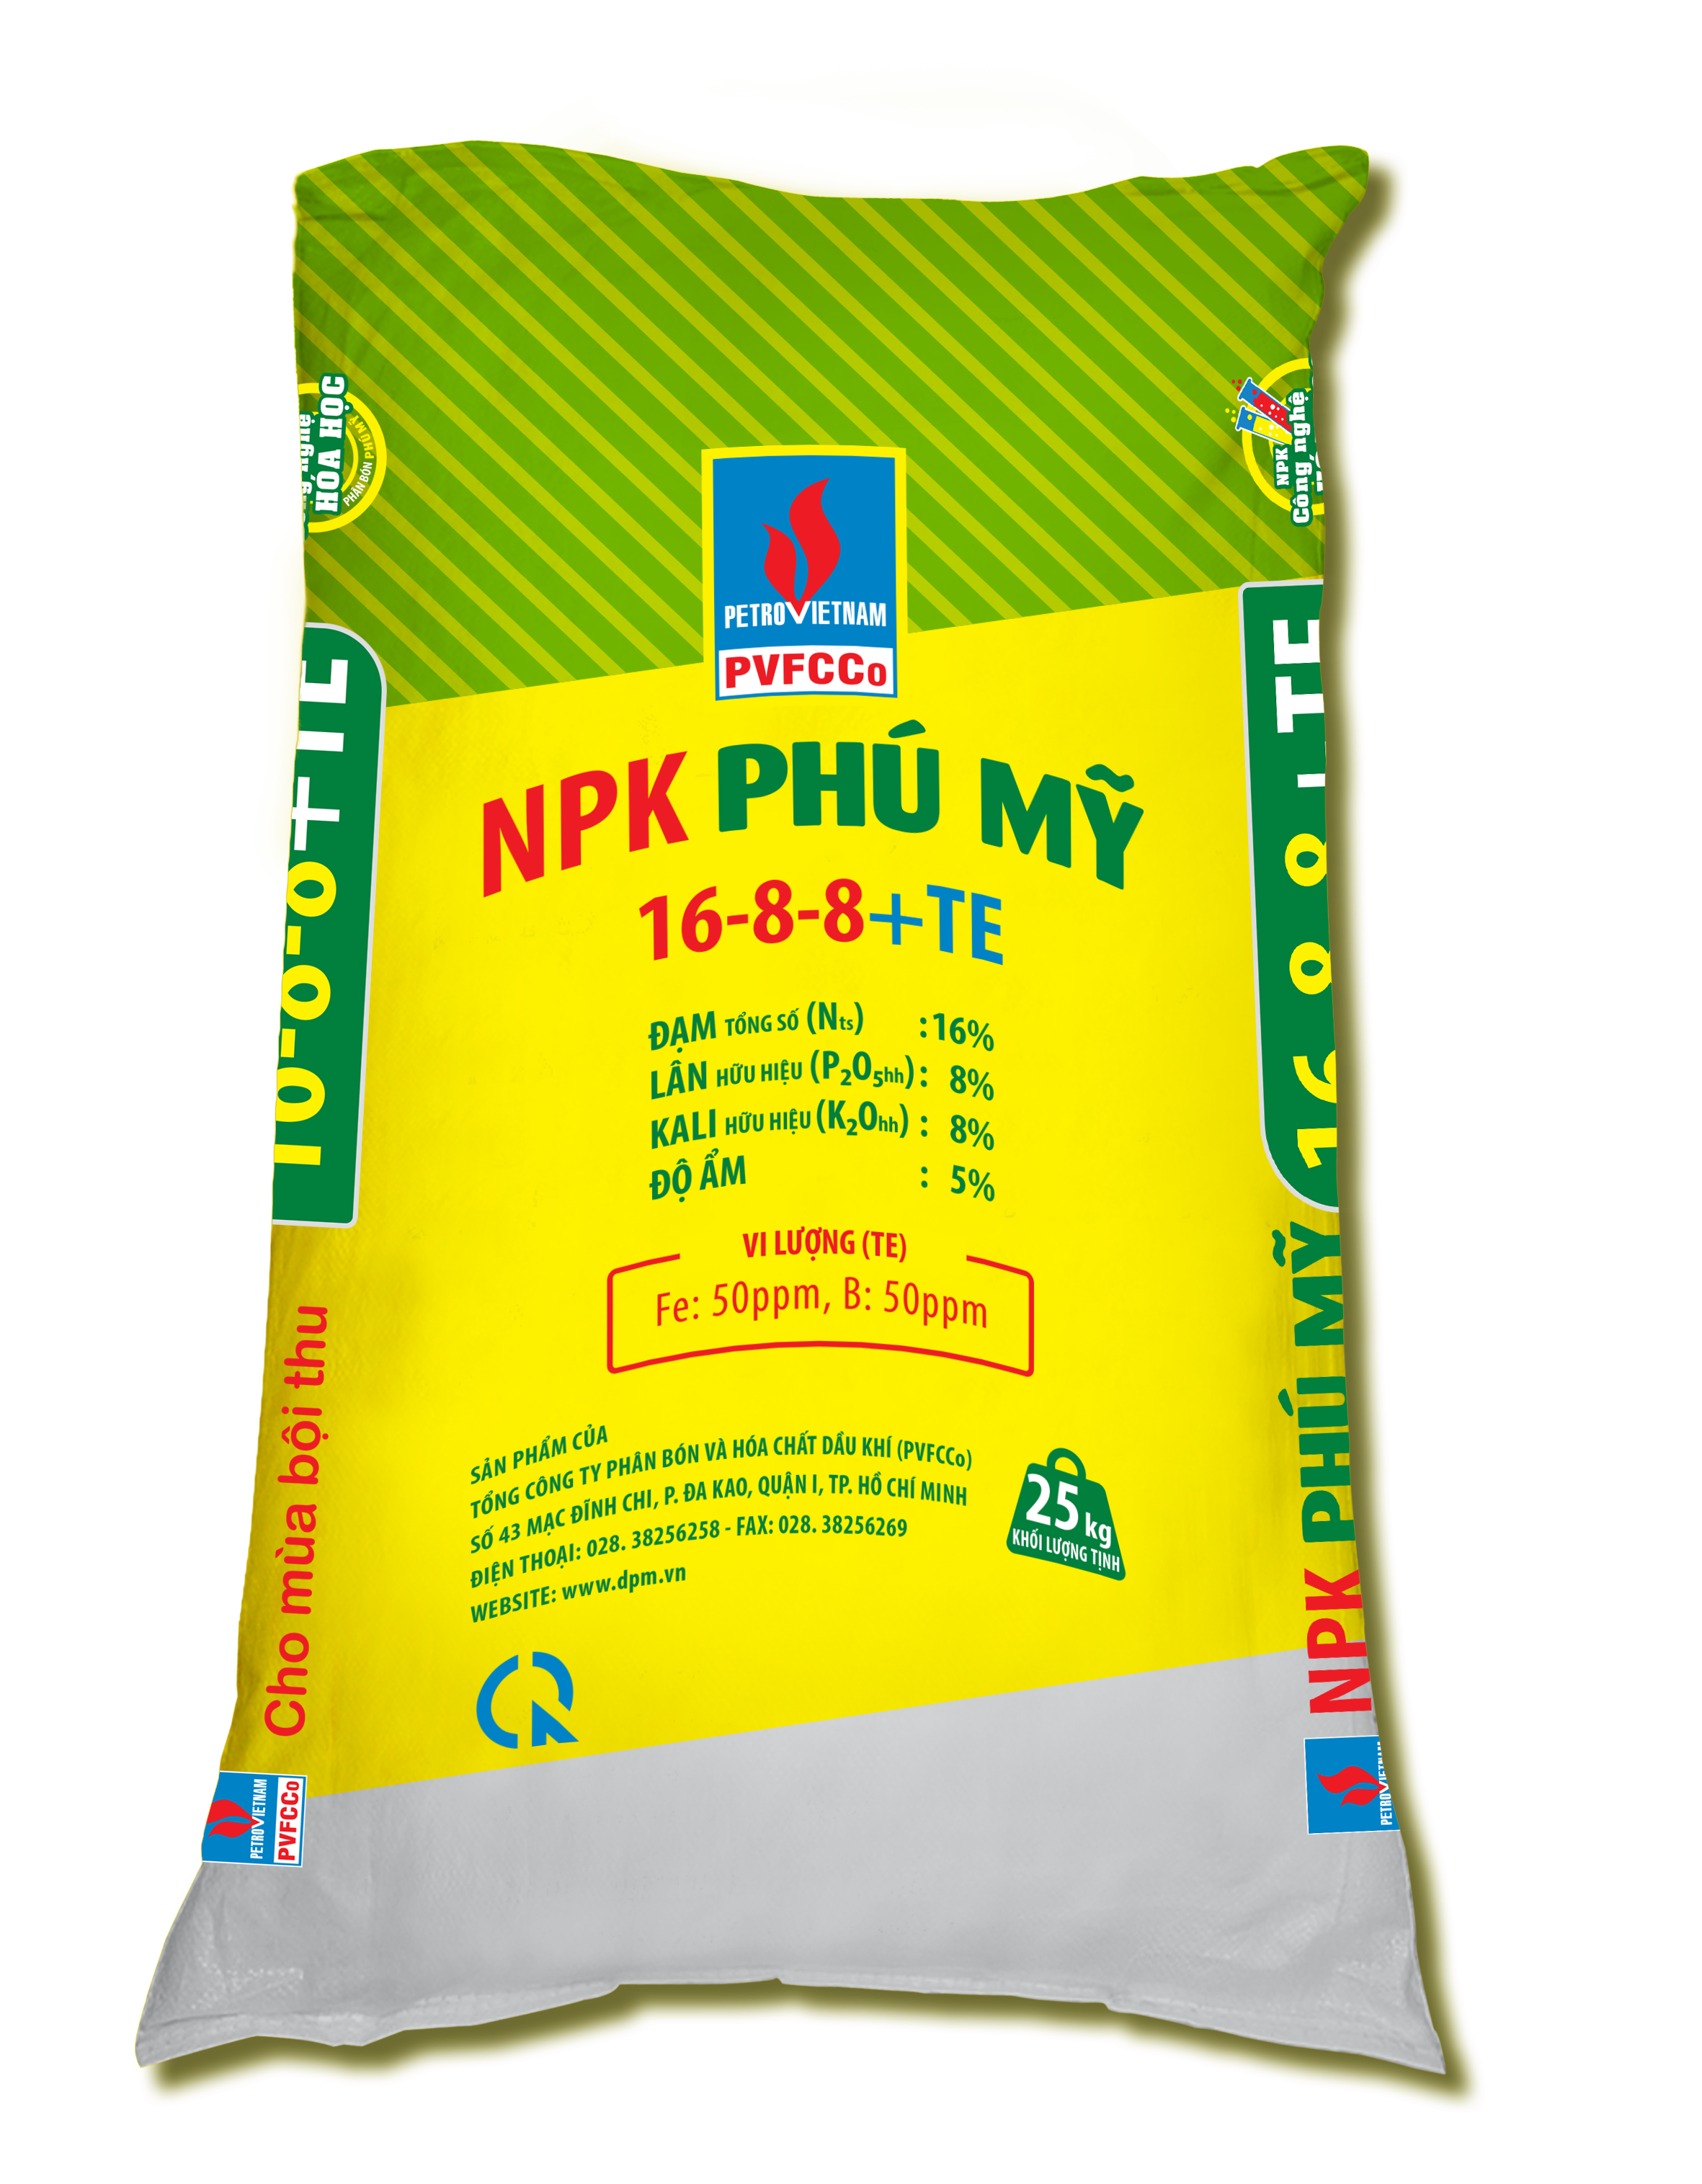 NPK Phu My 16-8-8+TE (Northern region)